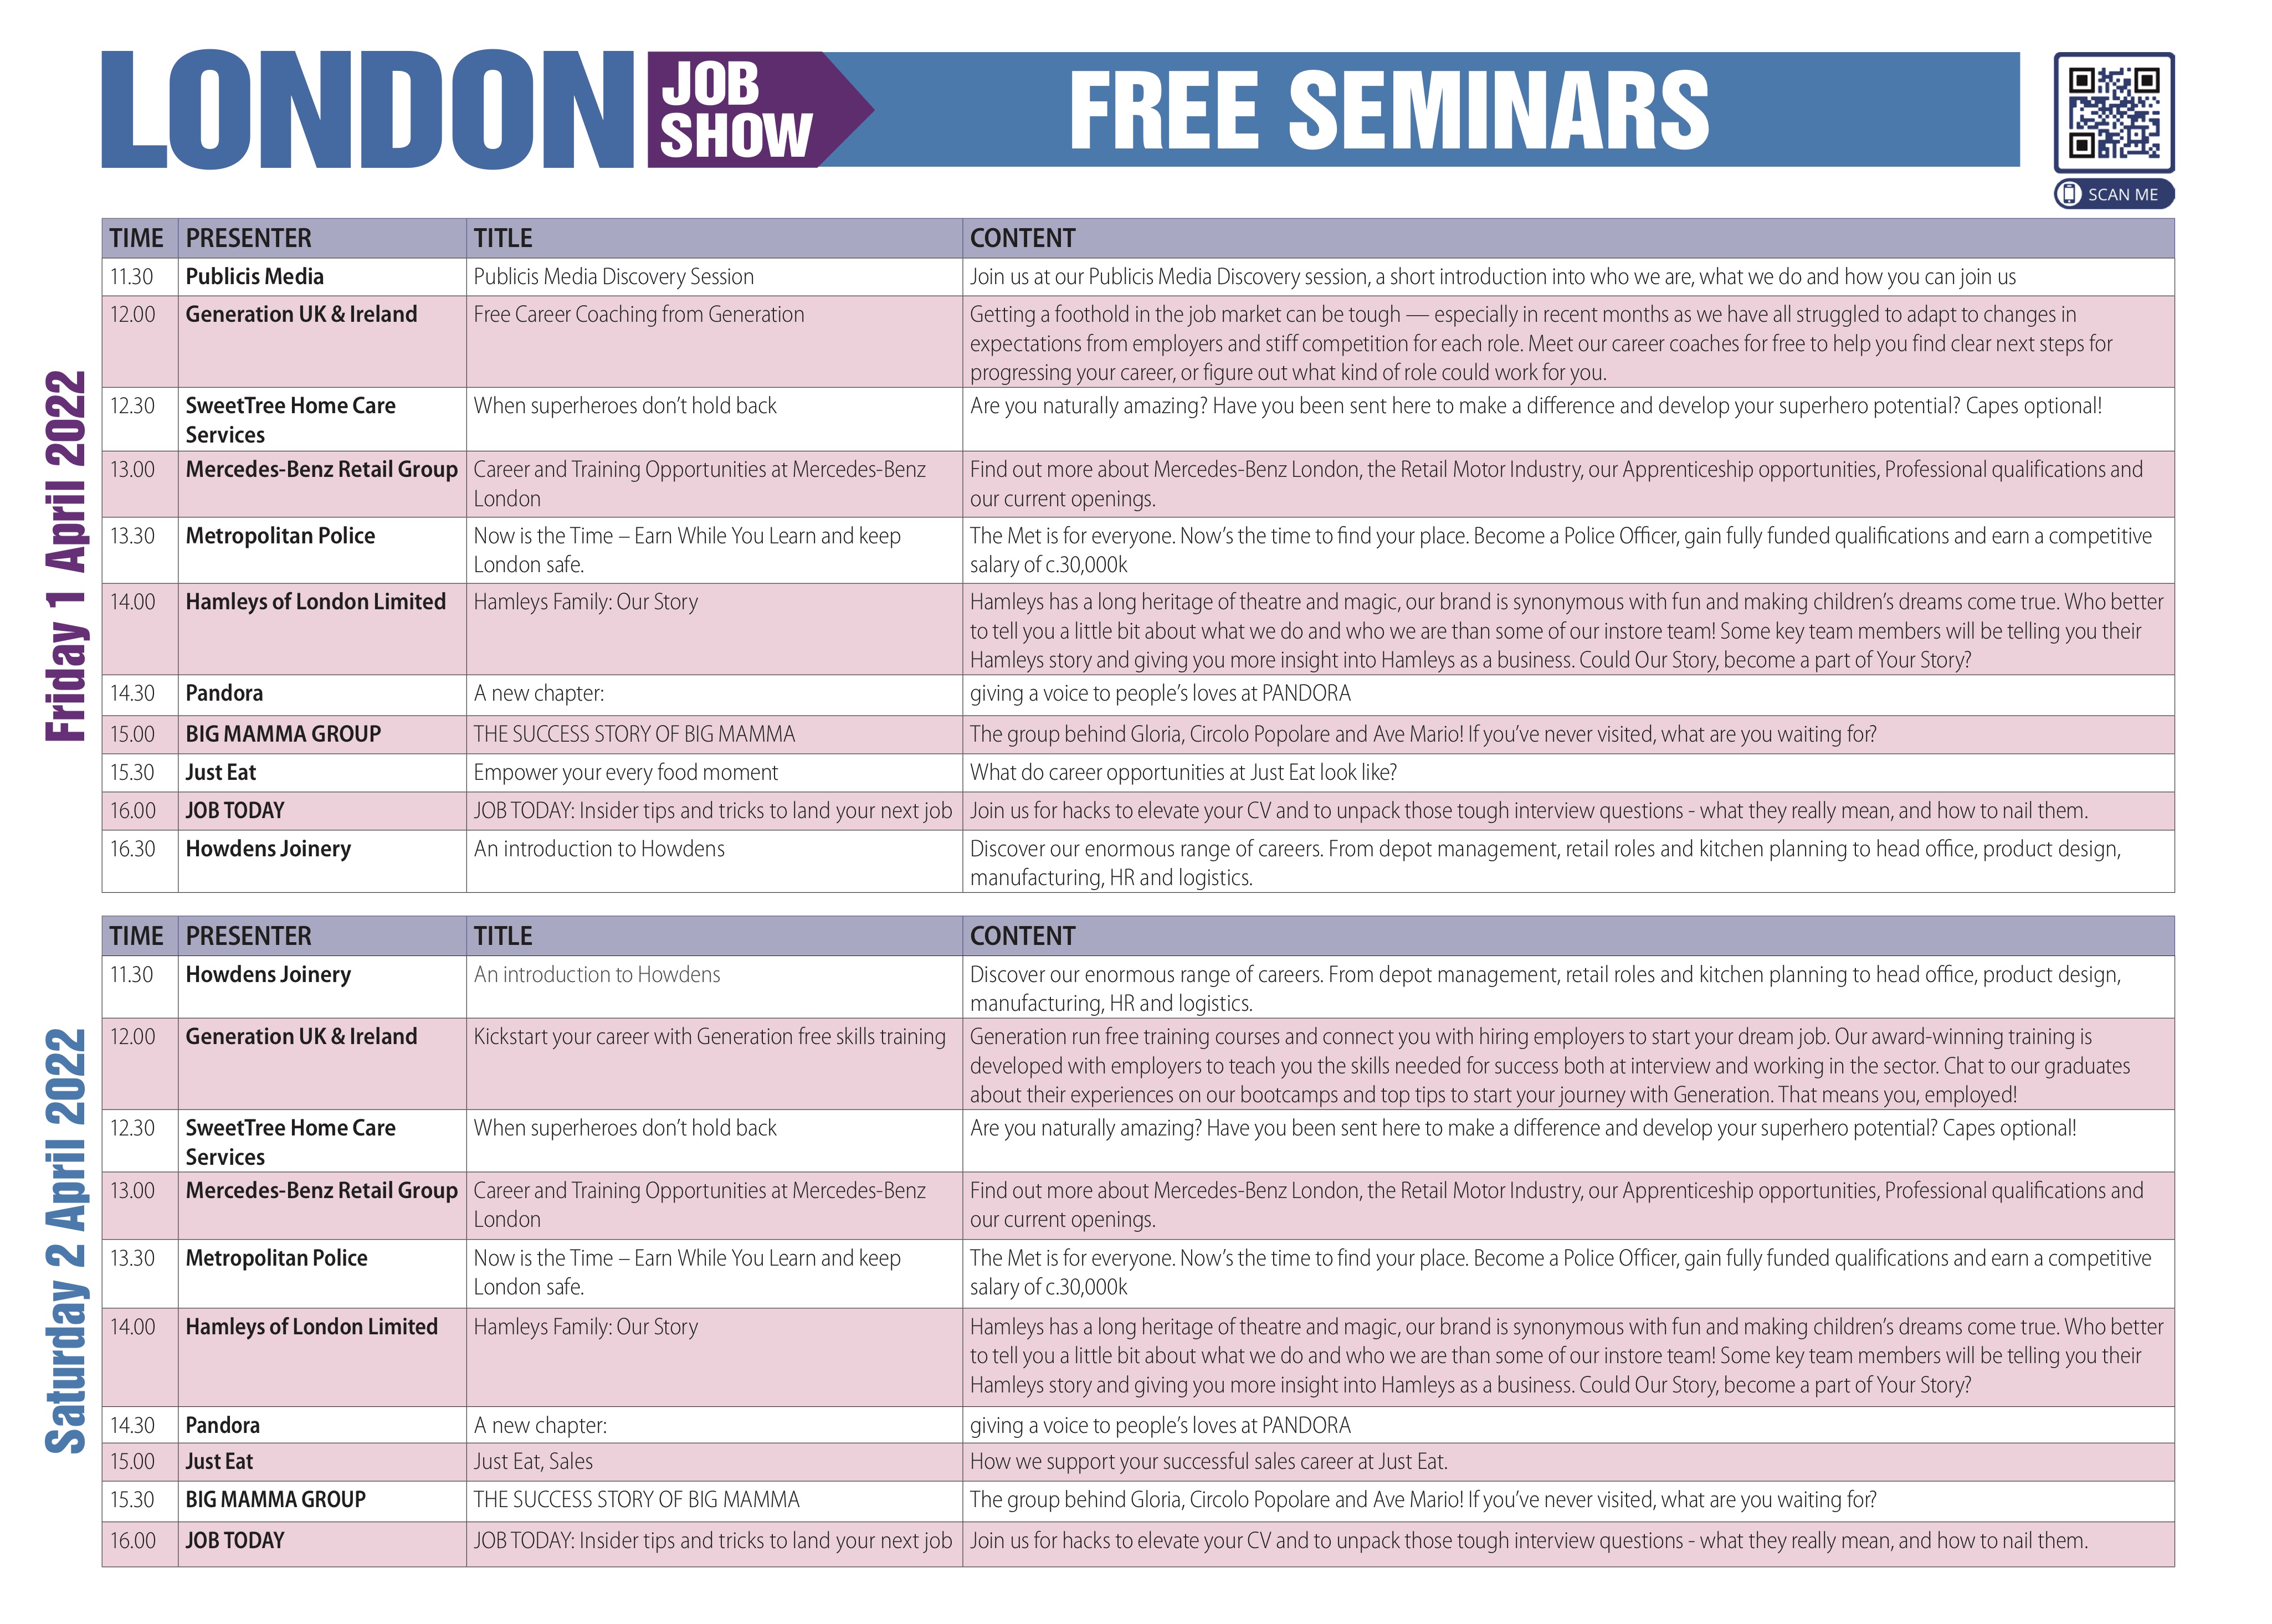 London Job Show Seminars